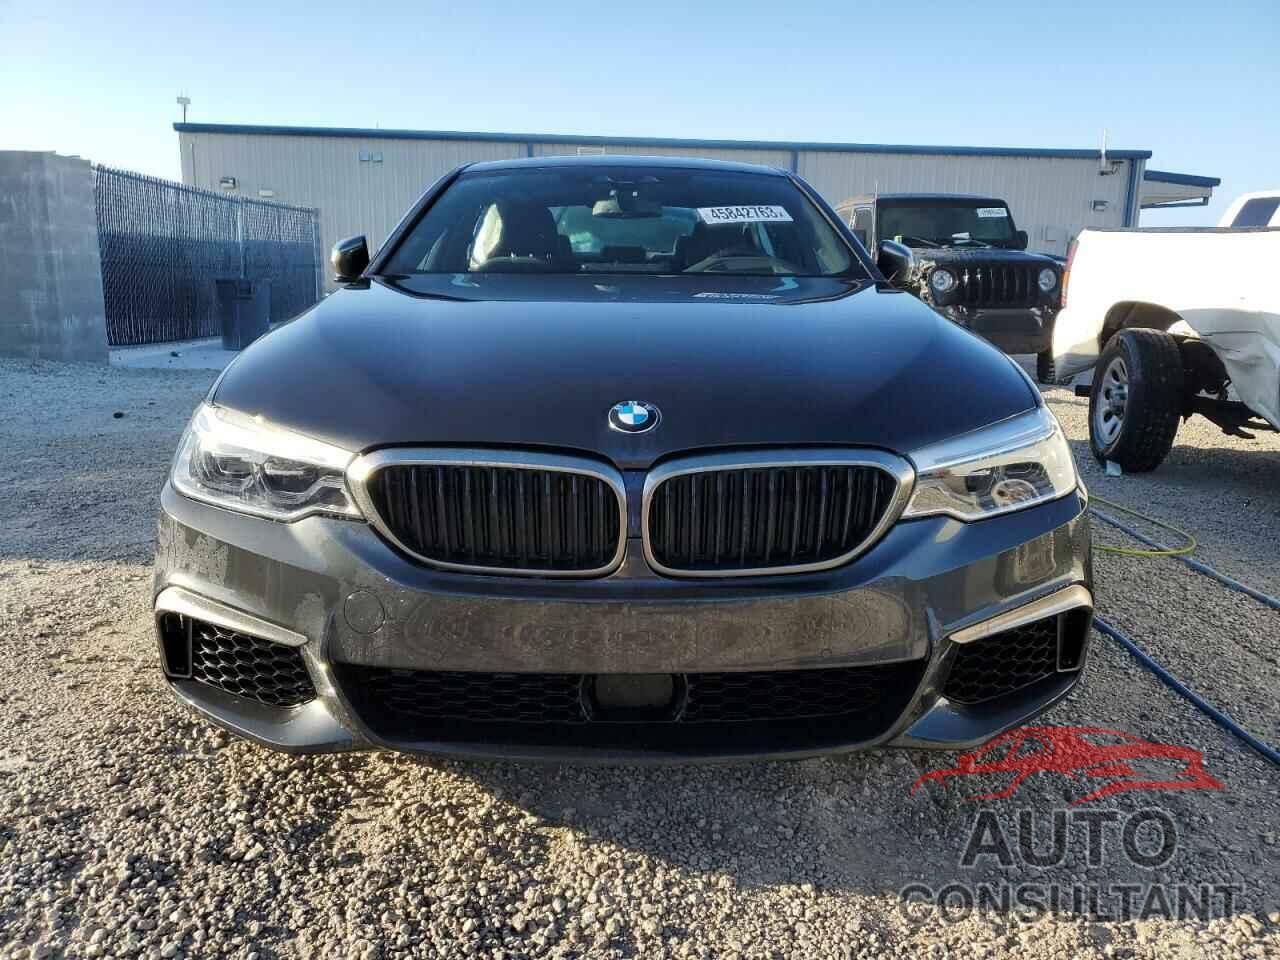 BMW M5 2020 - WBAJS7C03LBN96715